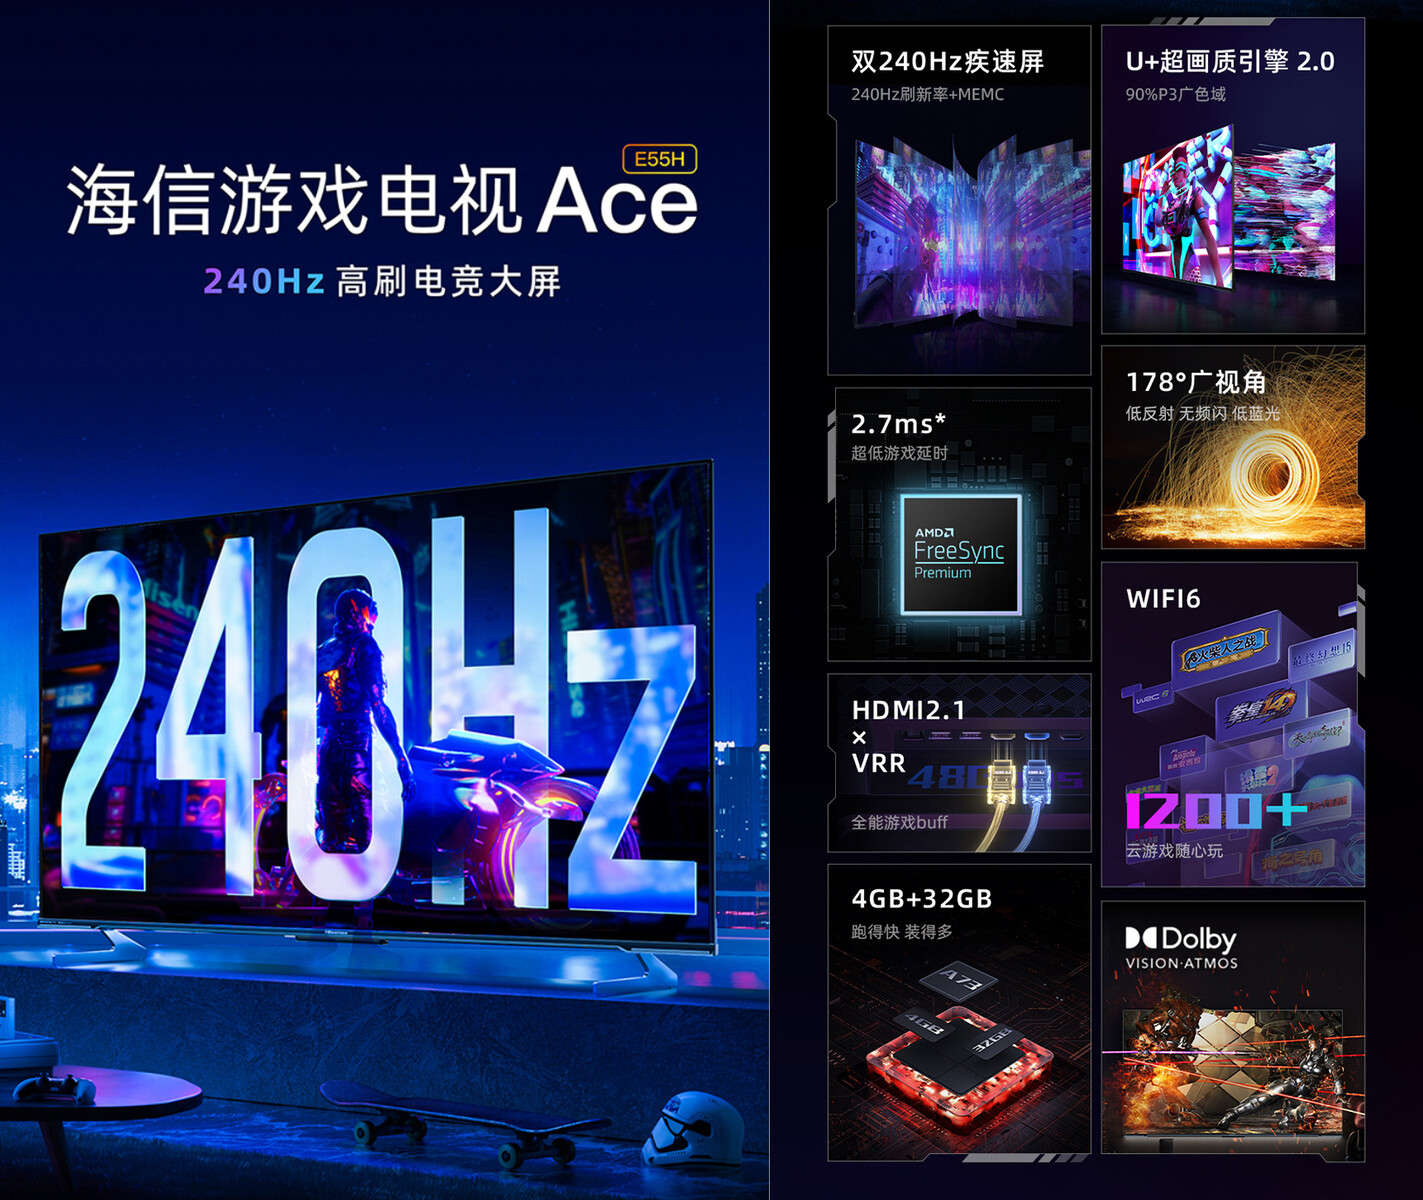 HiSense Gaming TV with 4k 120Hz display and MEMC anti-shake technology  announced - Gizmochina